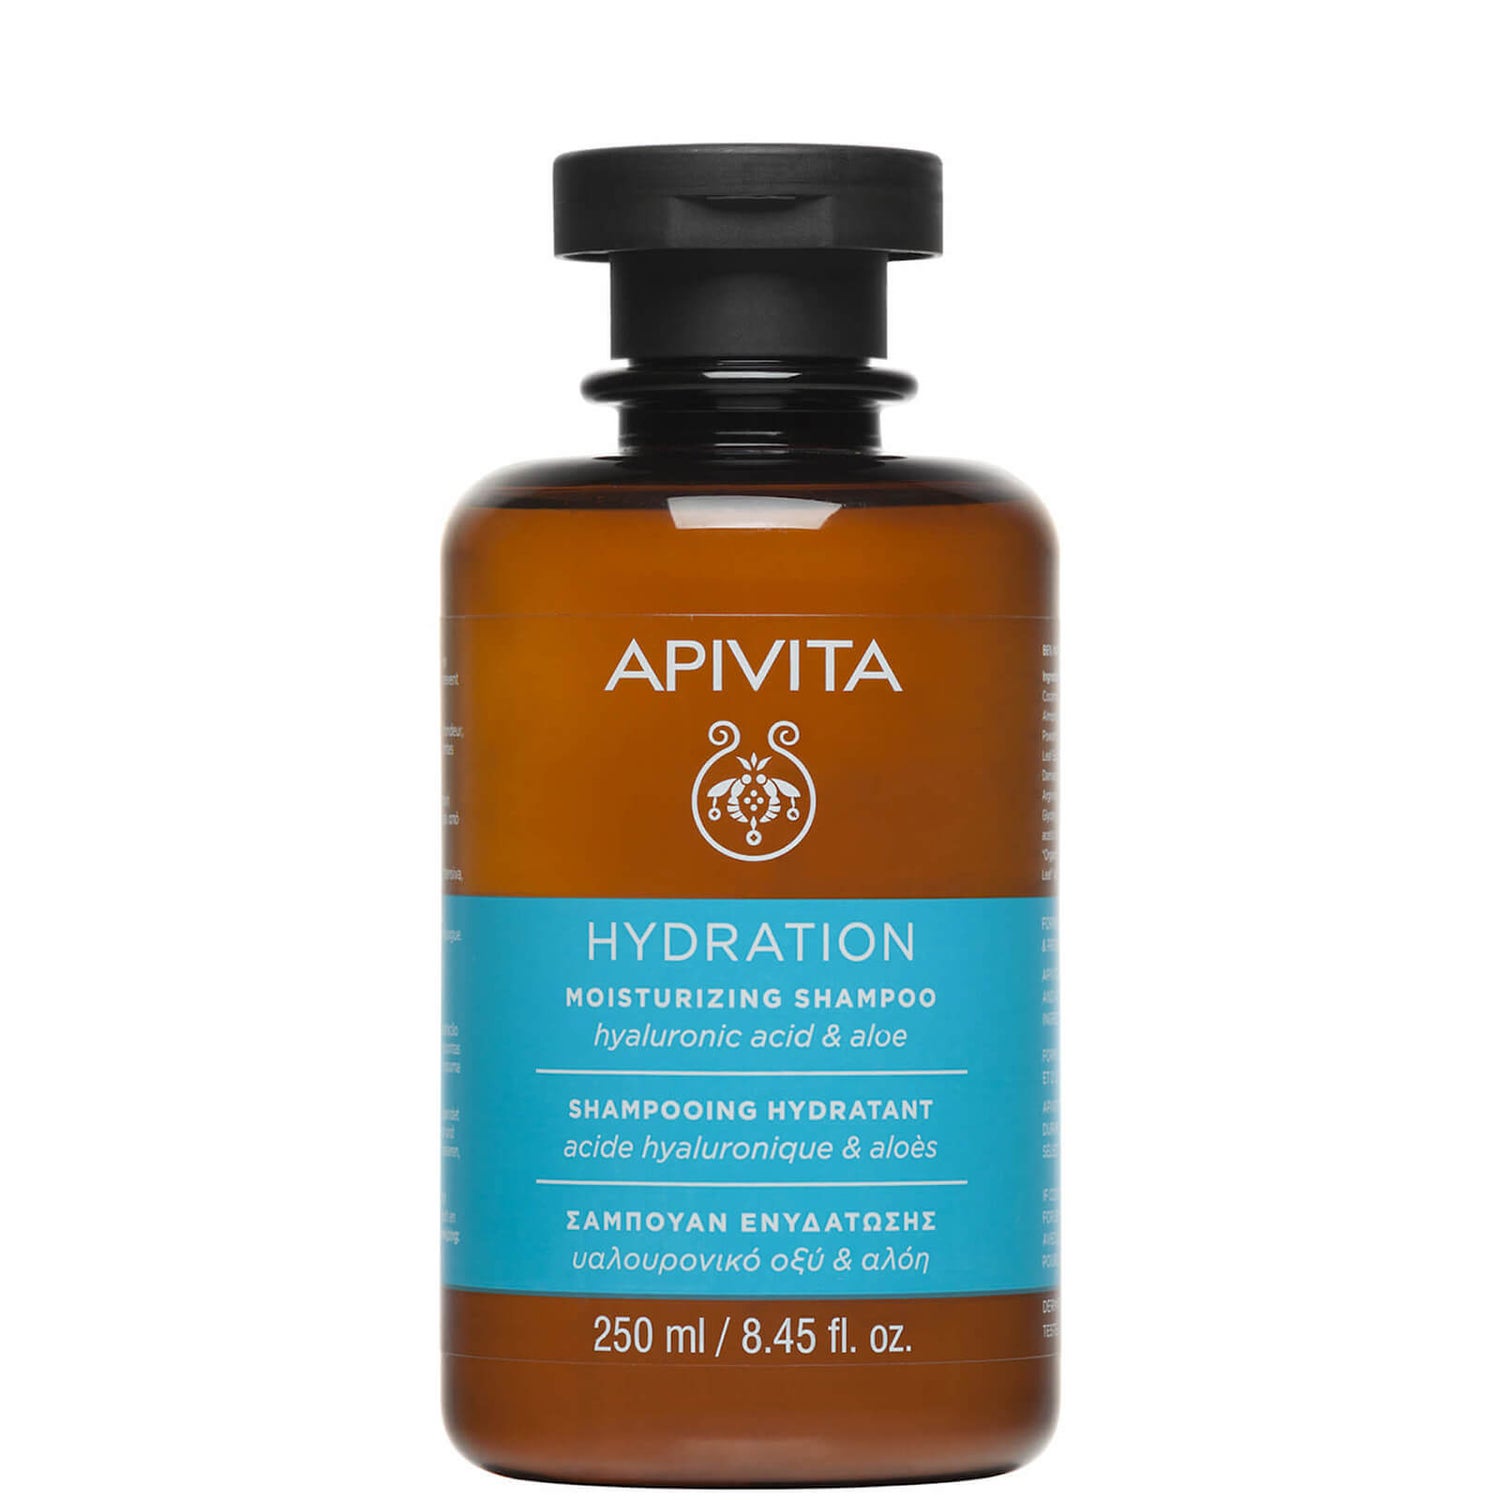 Shampooing Hydratant APIVITA 250 ml – Acide hyaluronique et aloe